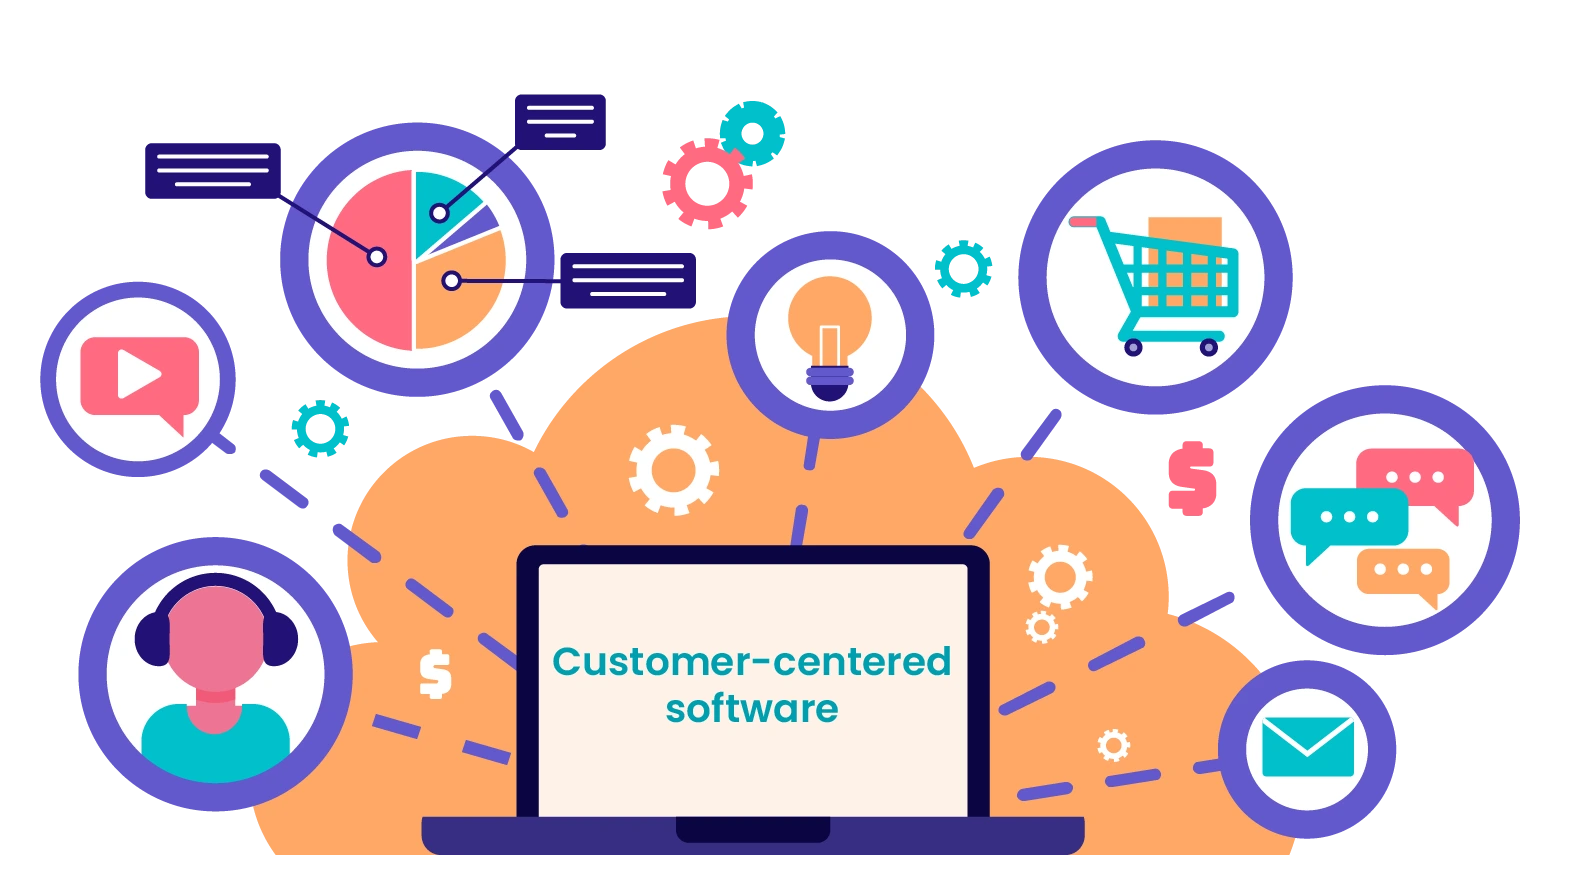 Customer-centered software